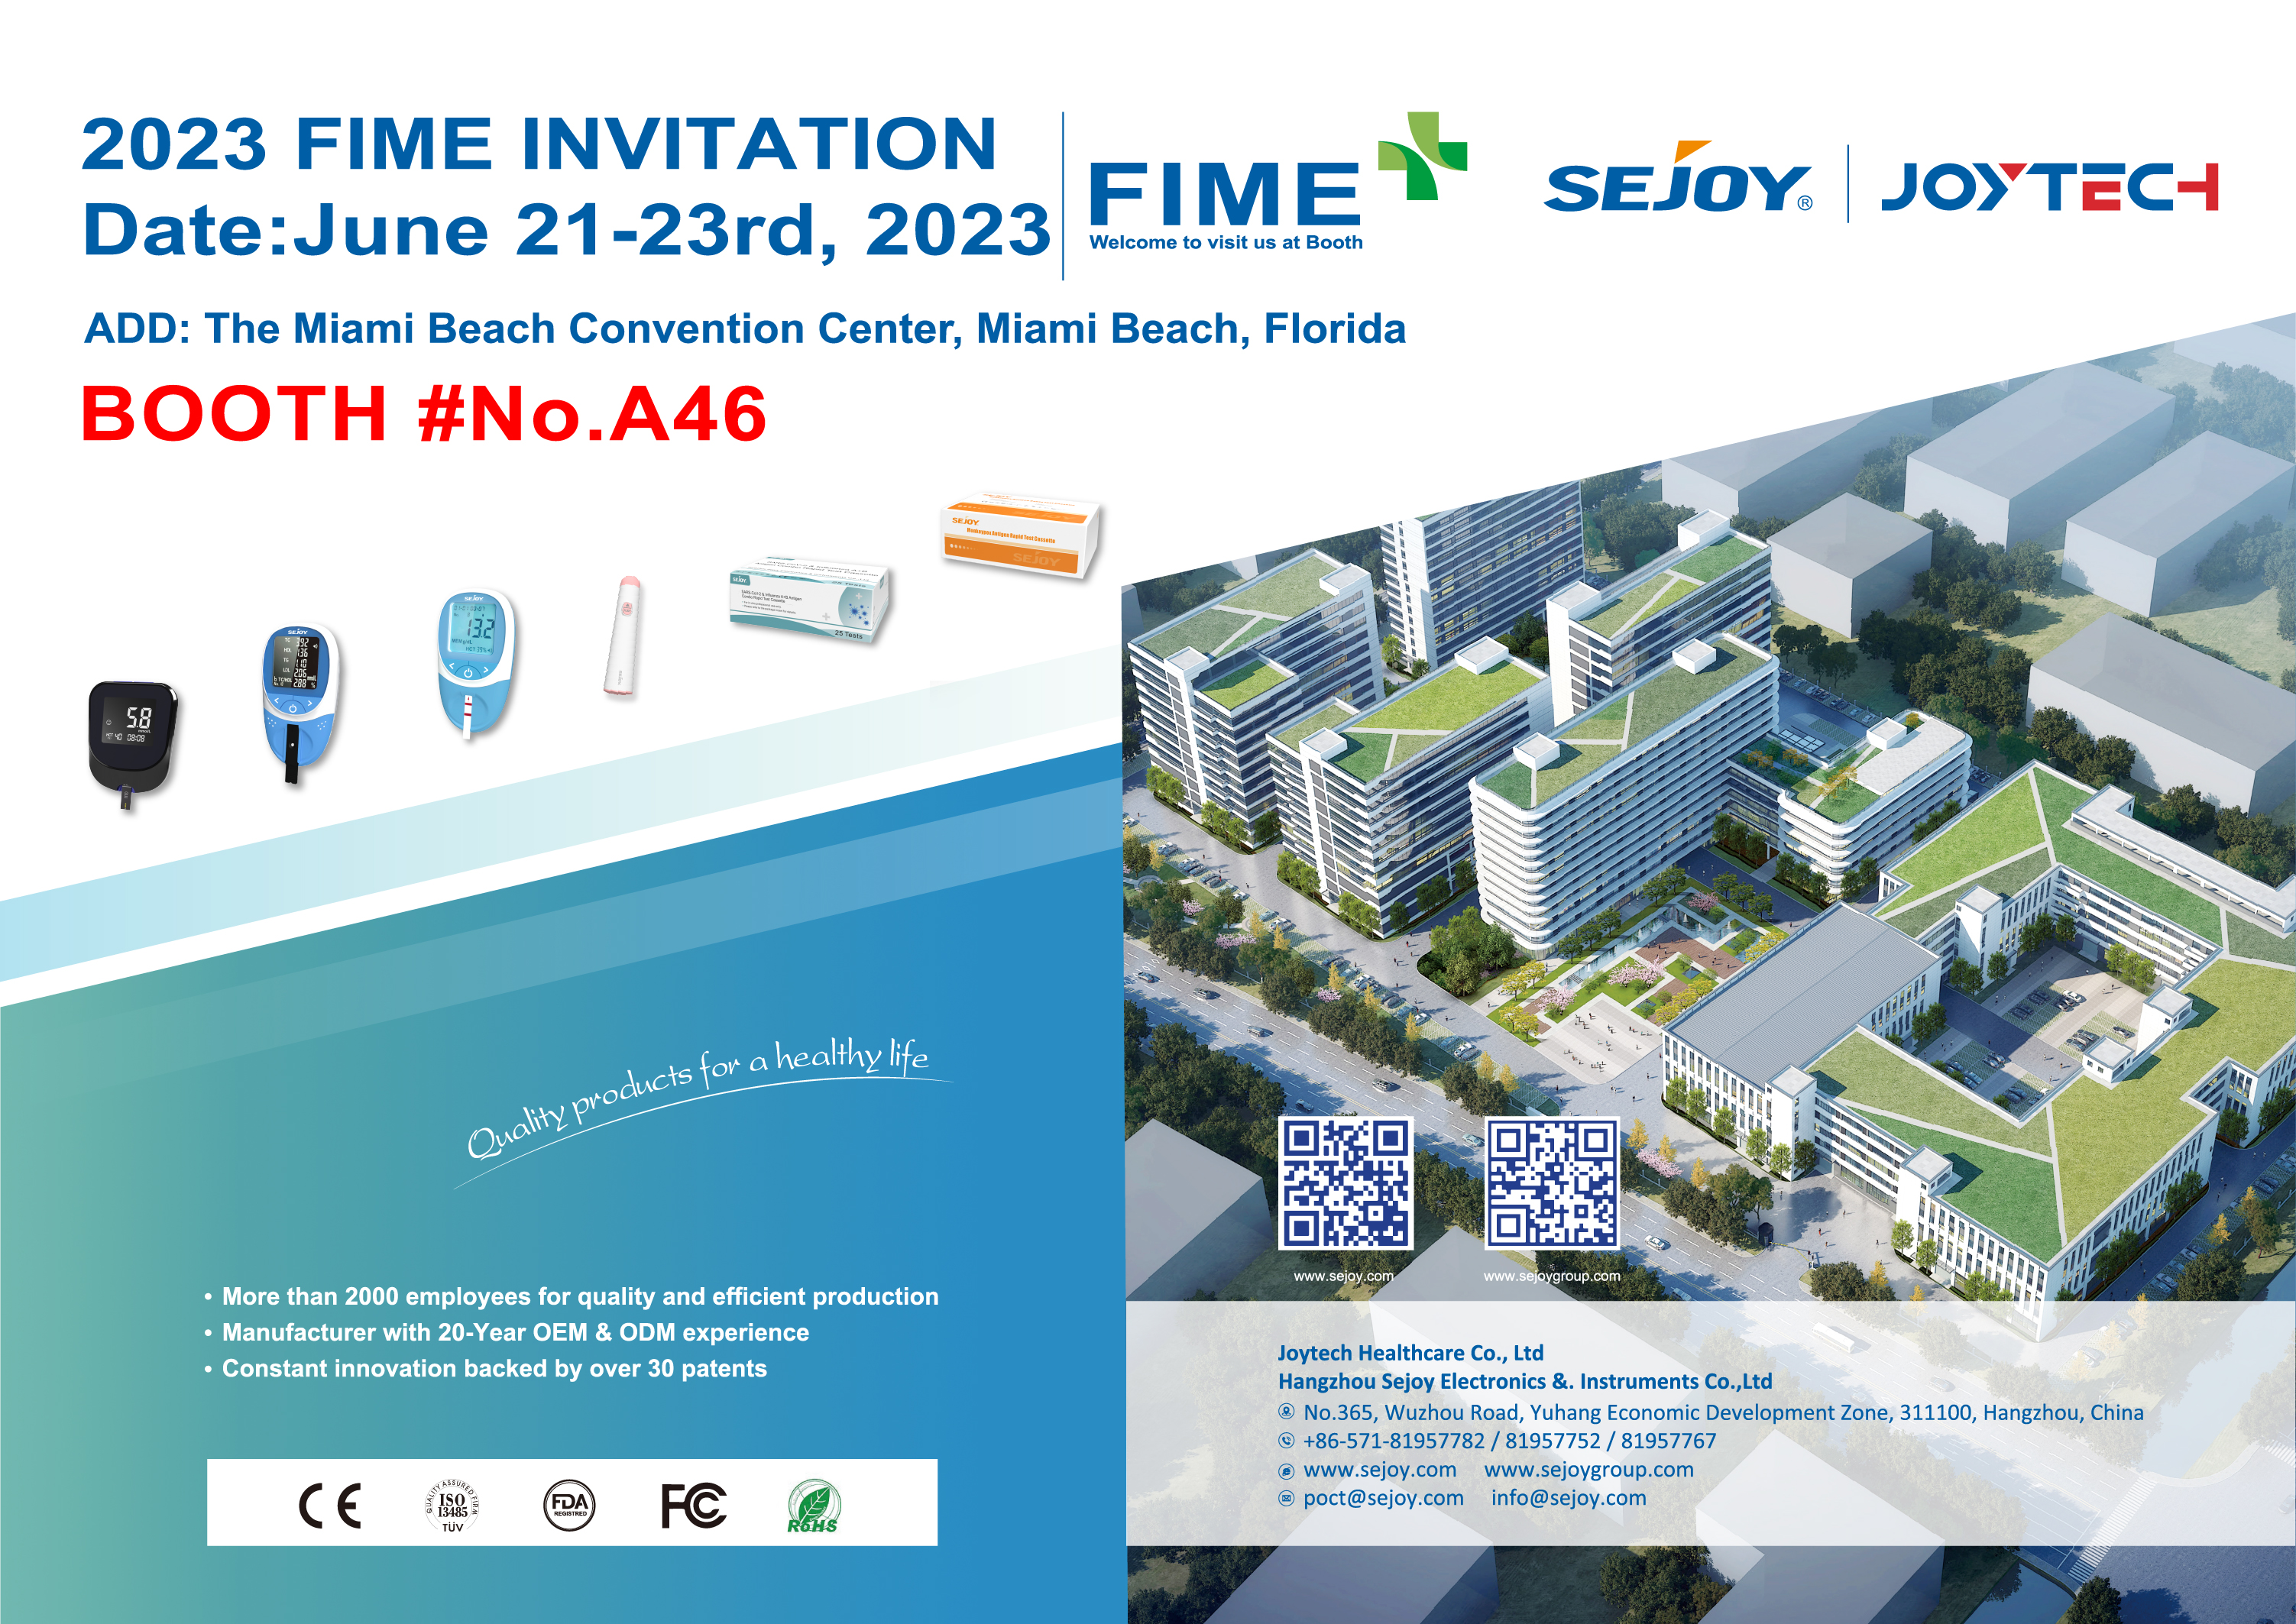 Exhibition Invitation -2023 FIME joy to meet you in Miami!